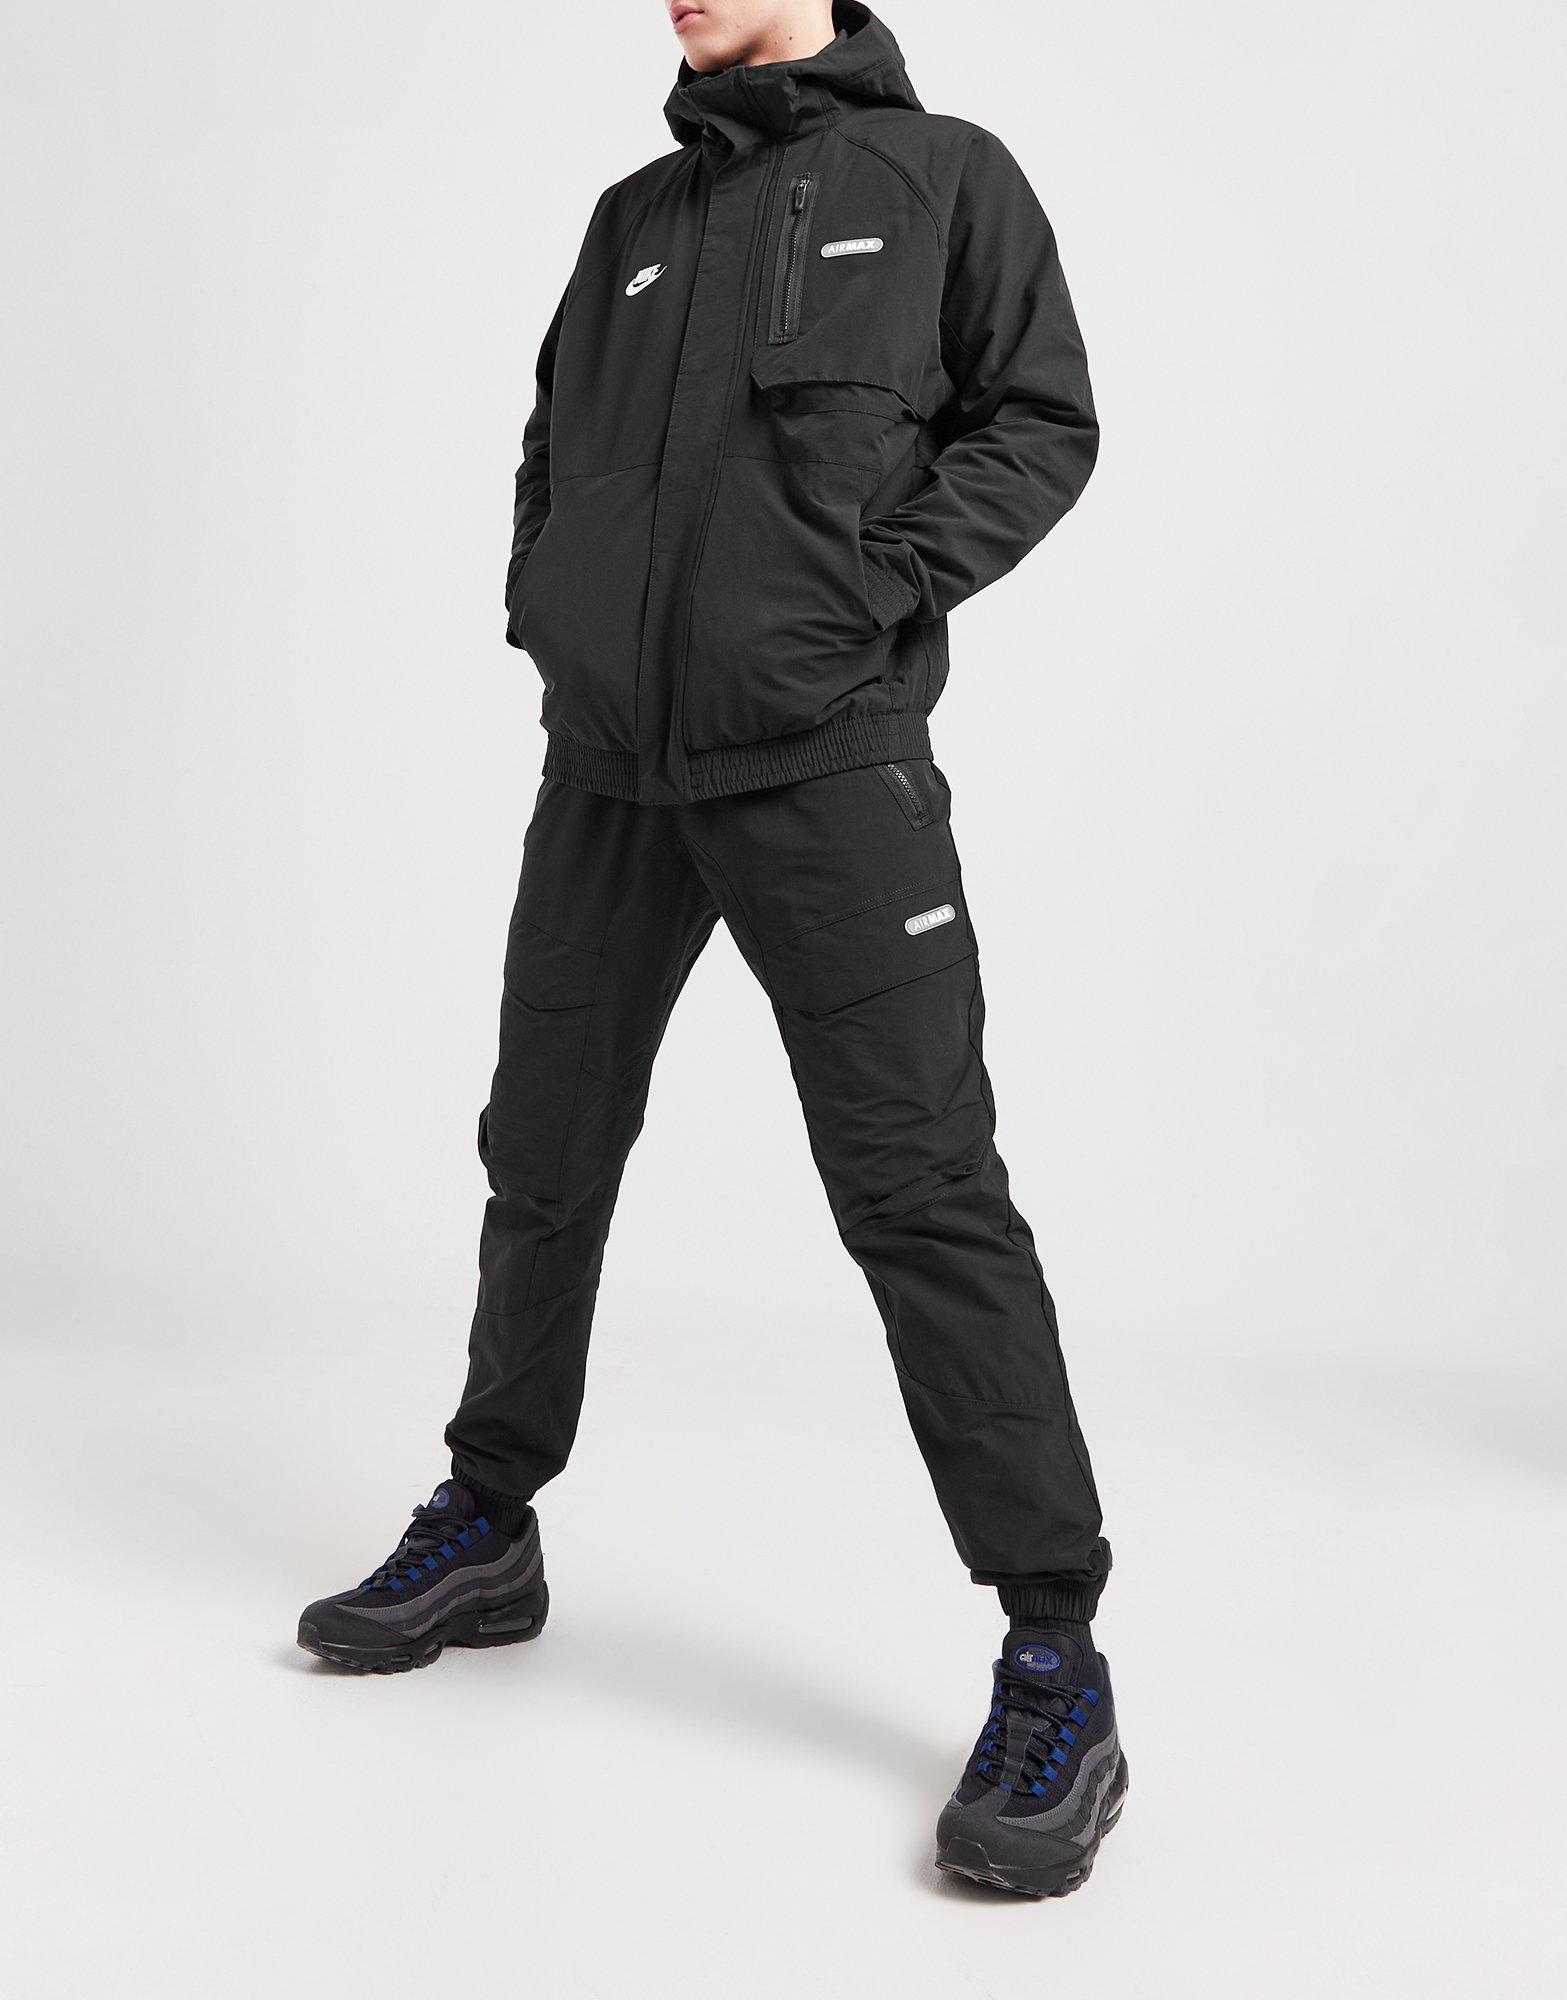 Black Nike Air Max Woven Cargo Track Pants - JD Sports Ireland